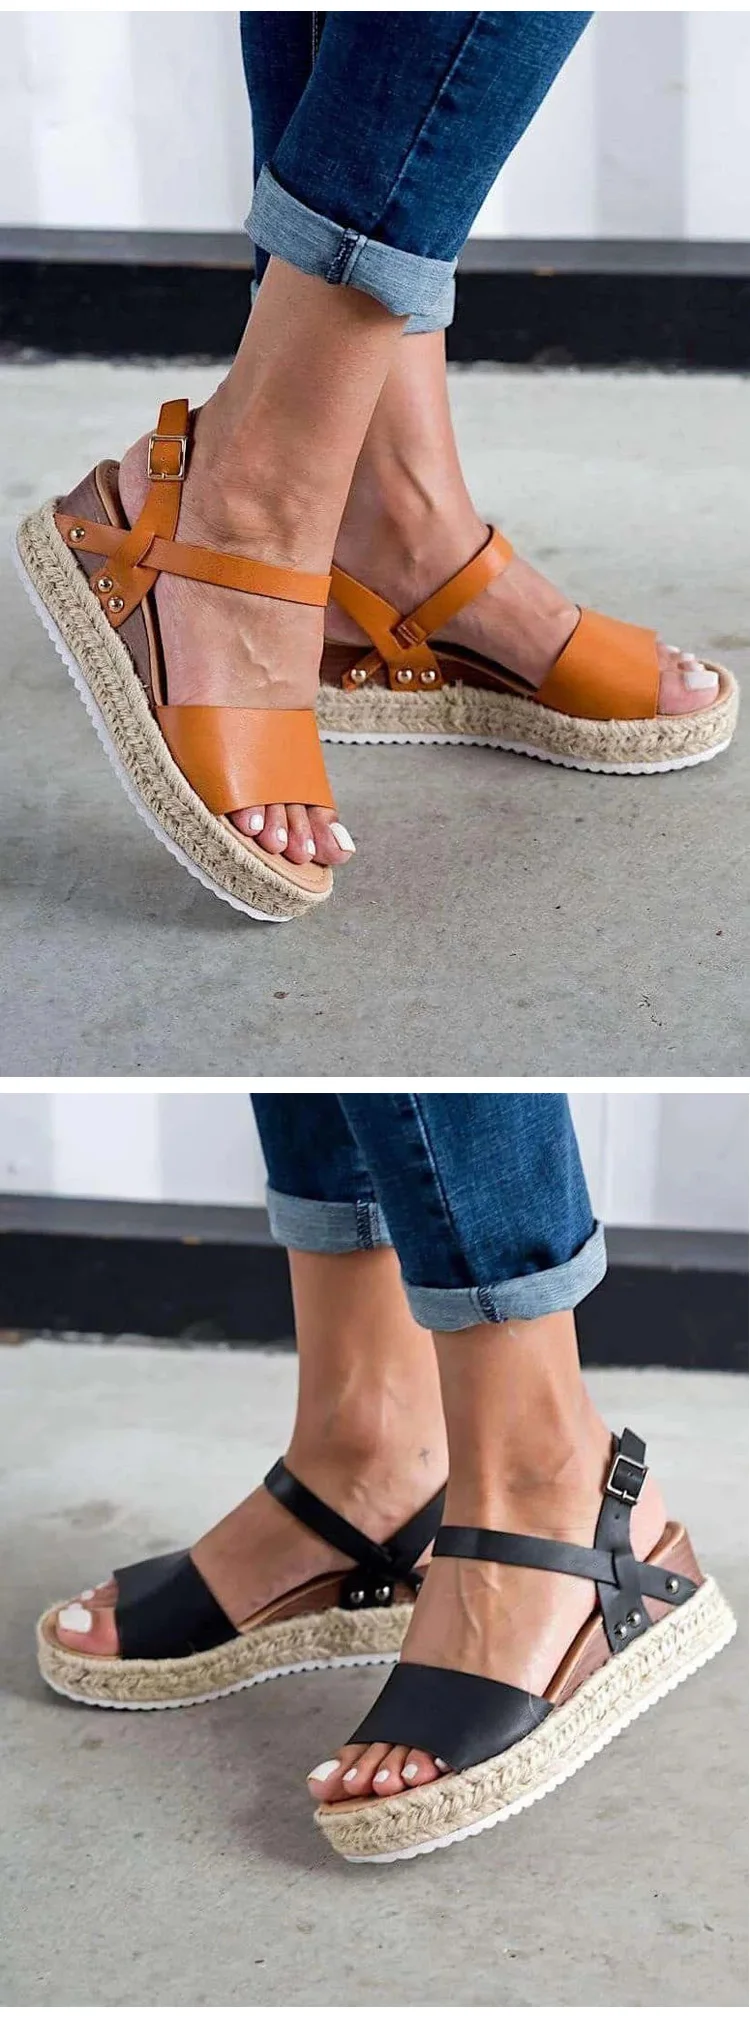 2020 Neue Rose Gold Schuhe Casual High Heels Ankle Strap Sommer Strand Jute Espadrille Sandalen Frauen